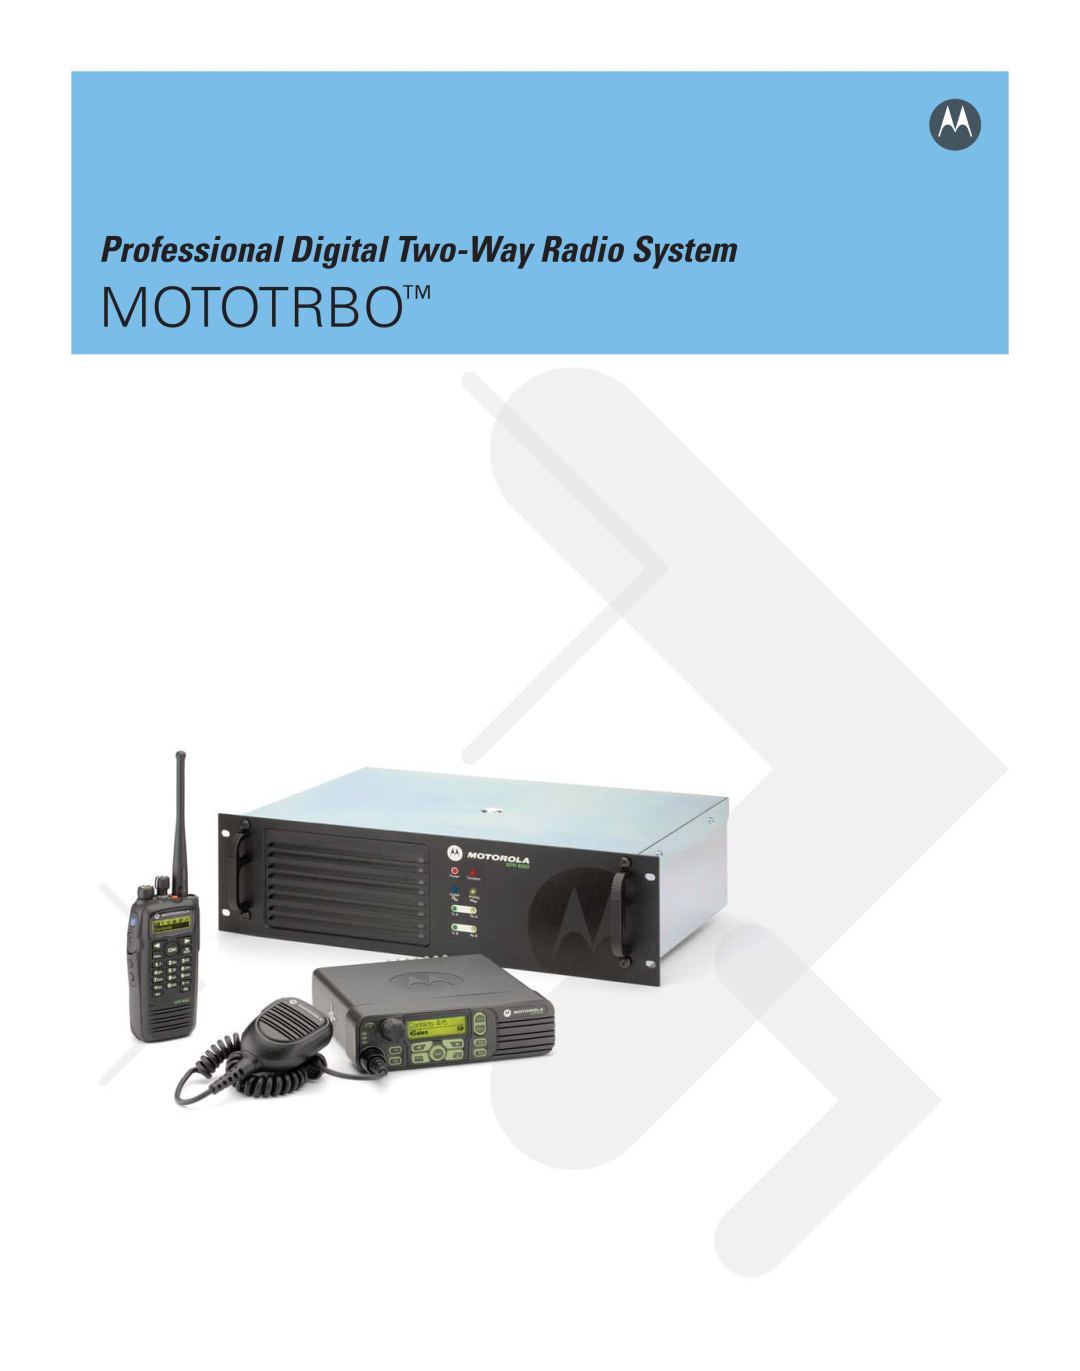 Motorola Professional Digital Two-Way Radio System brochure Mototrbo 